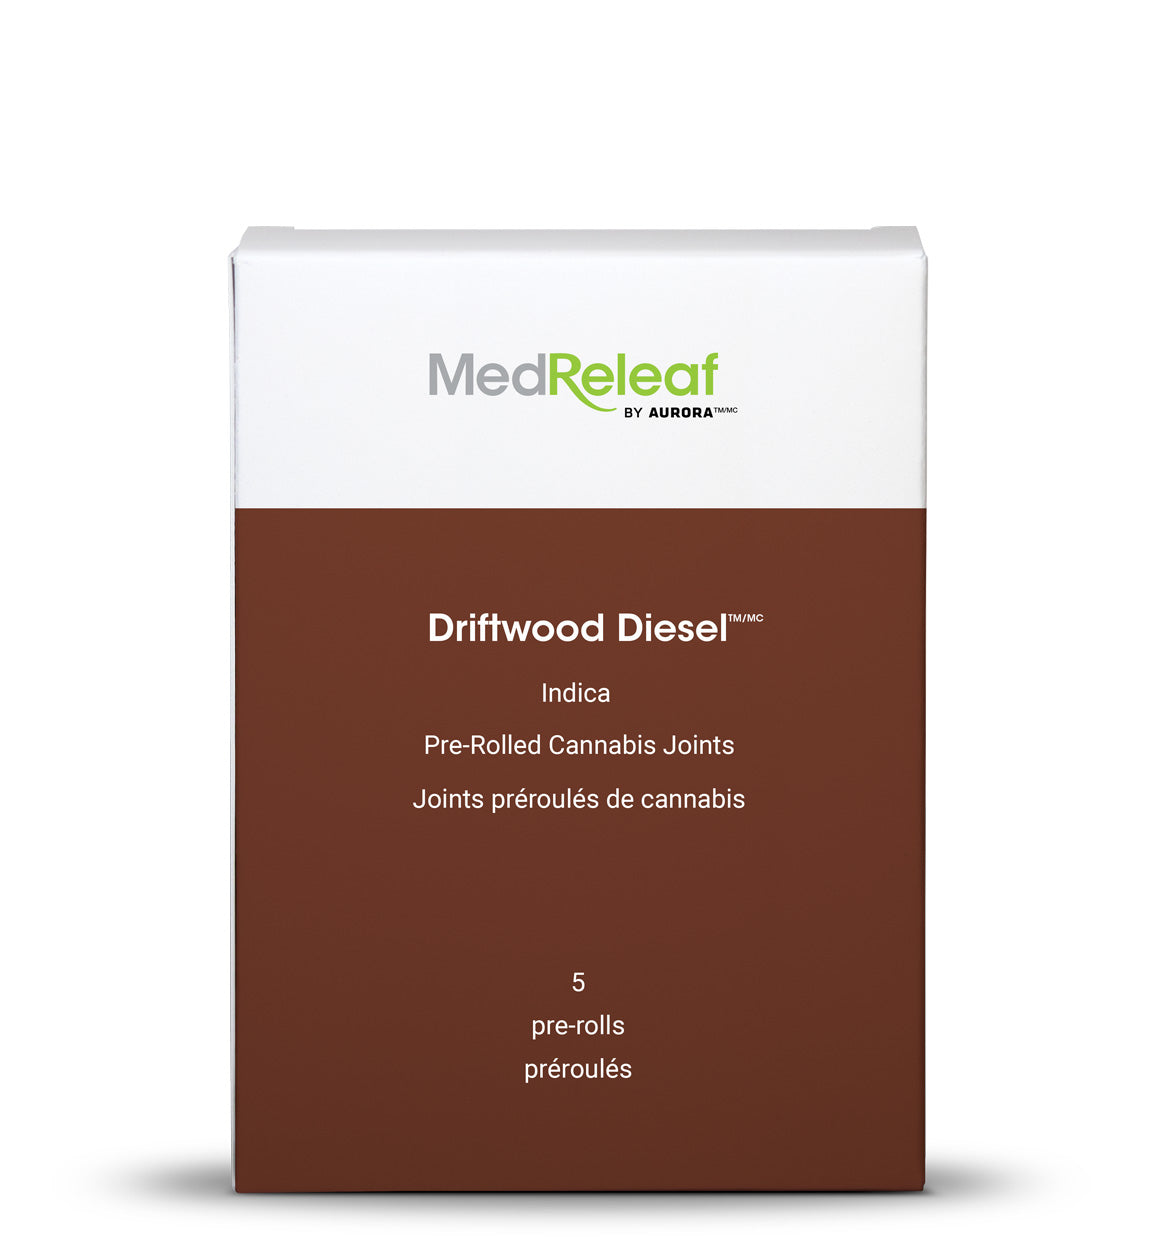 Driftwood Diesel Pre-Rolls